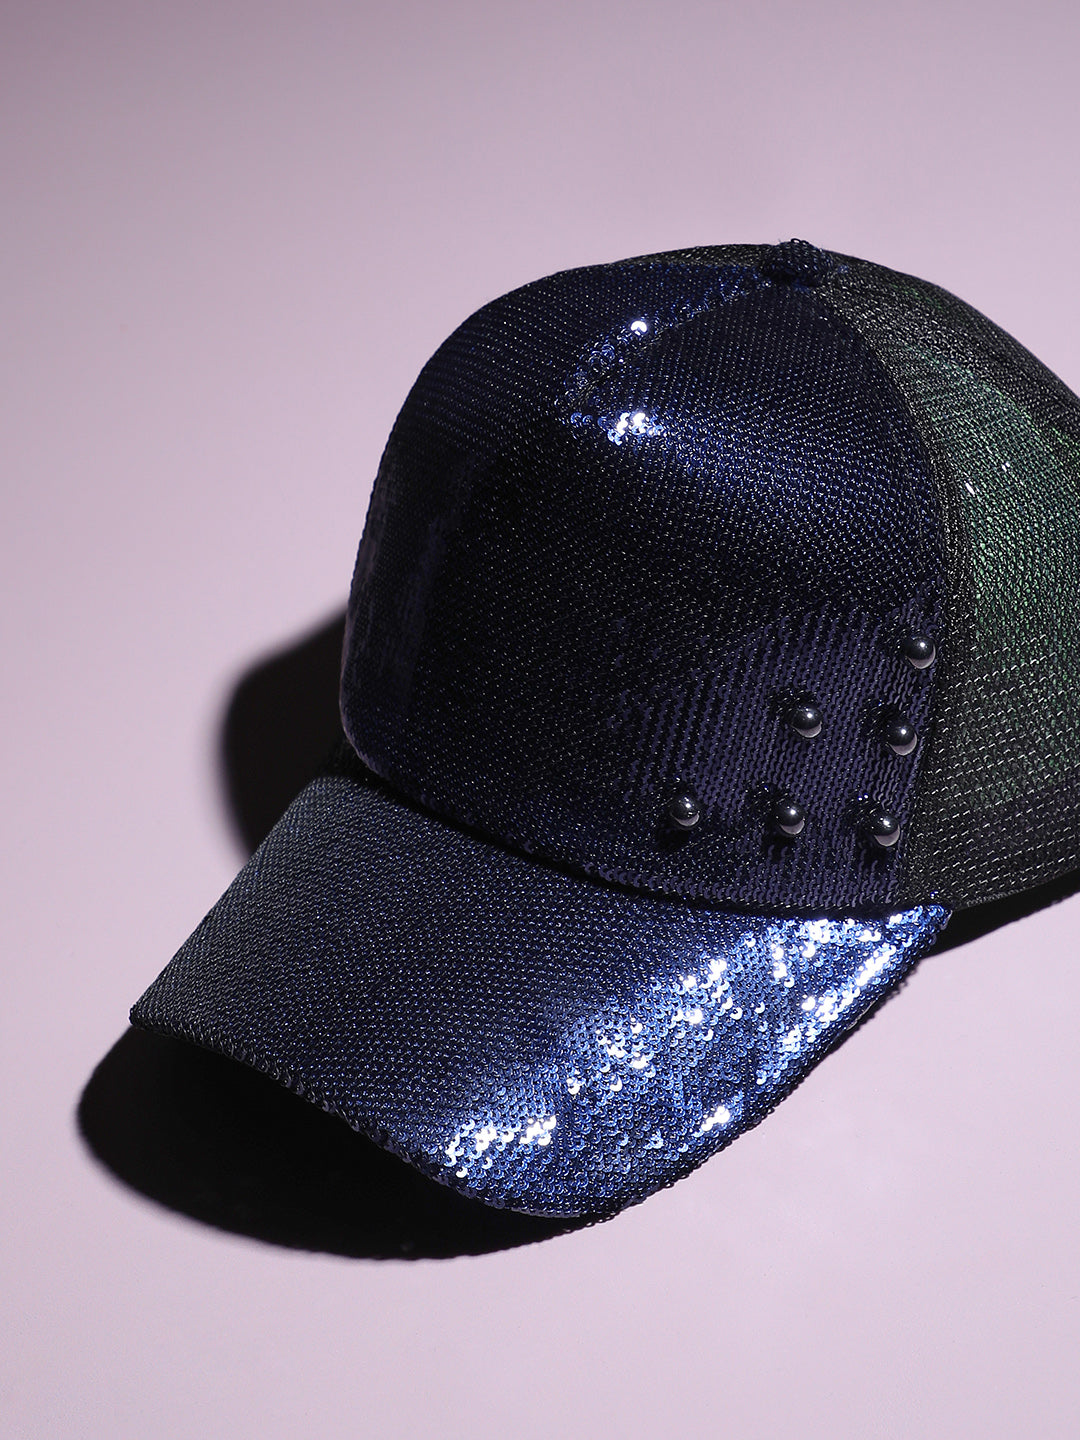 Embellished Baseball Cap - Navy Blue & Black